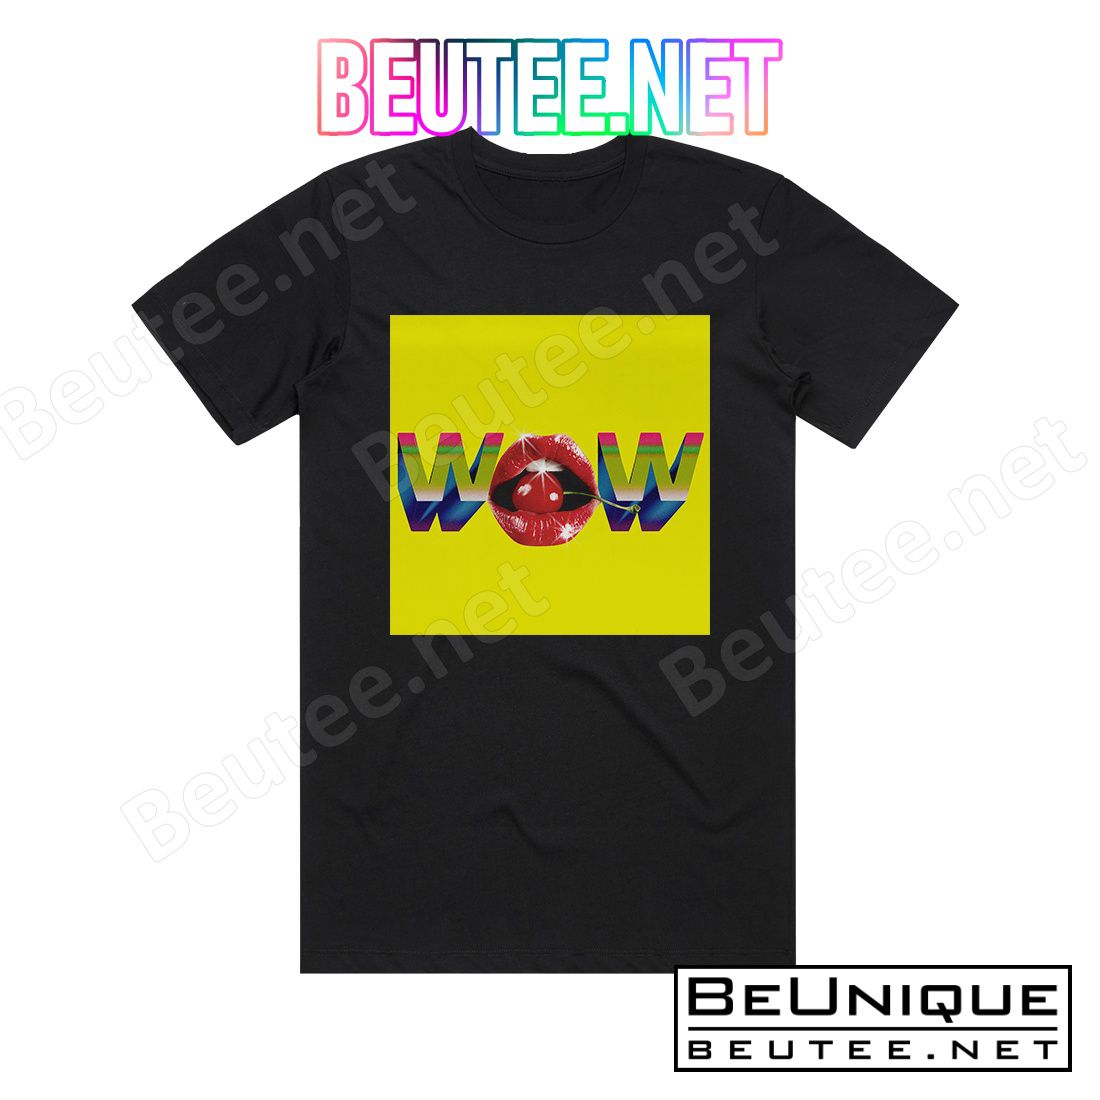 Beck Wow Album Cover T-Shirt